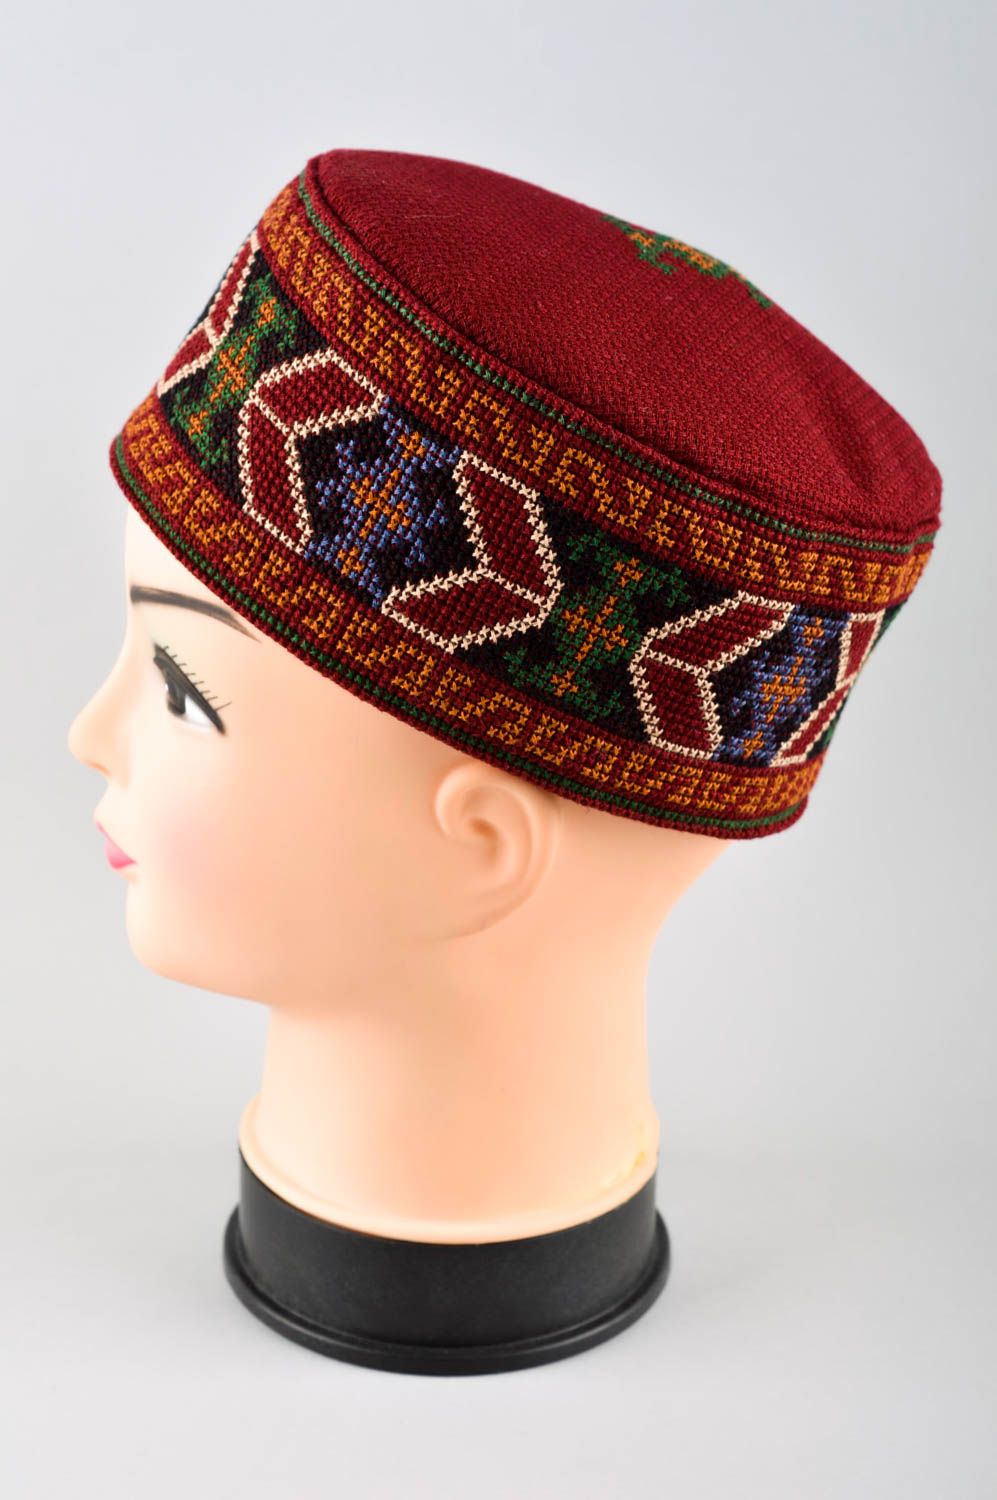 Handmade mens hat textile hat design warm headwear ideas fashion accessories photo 3